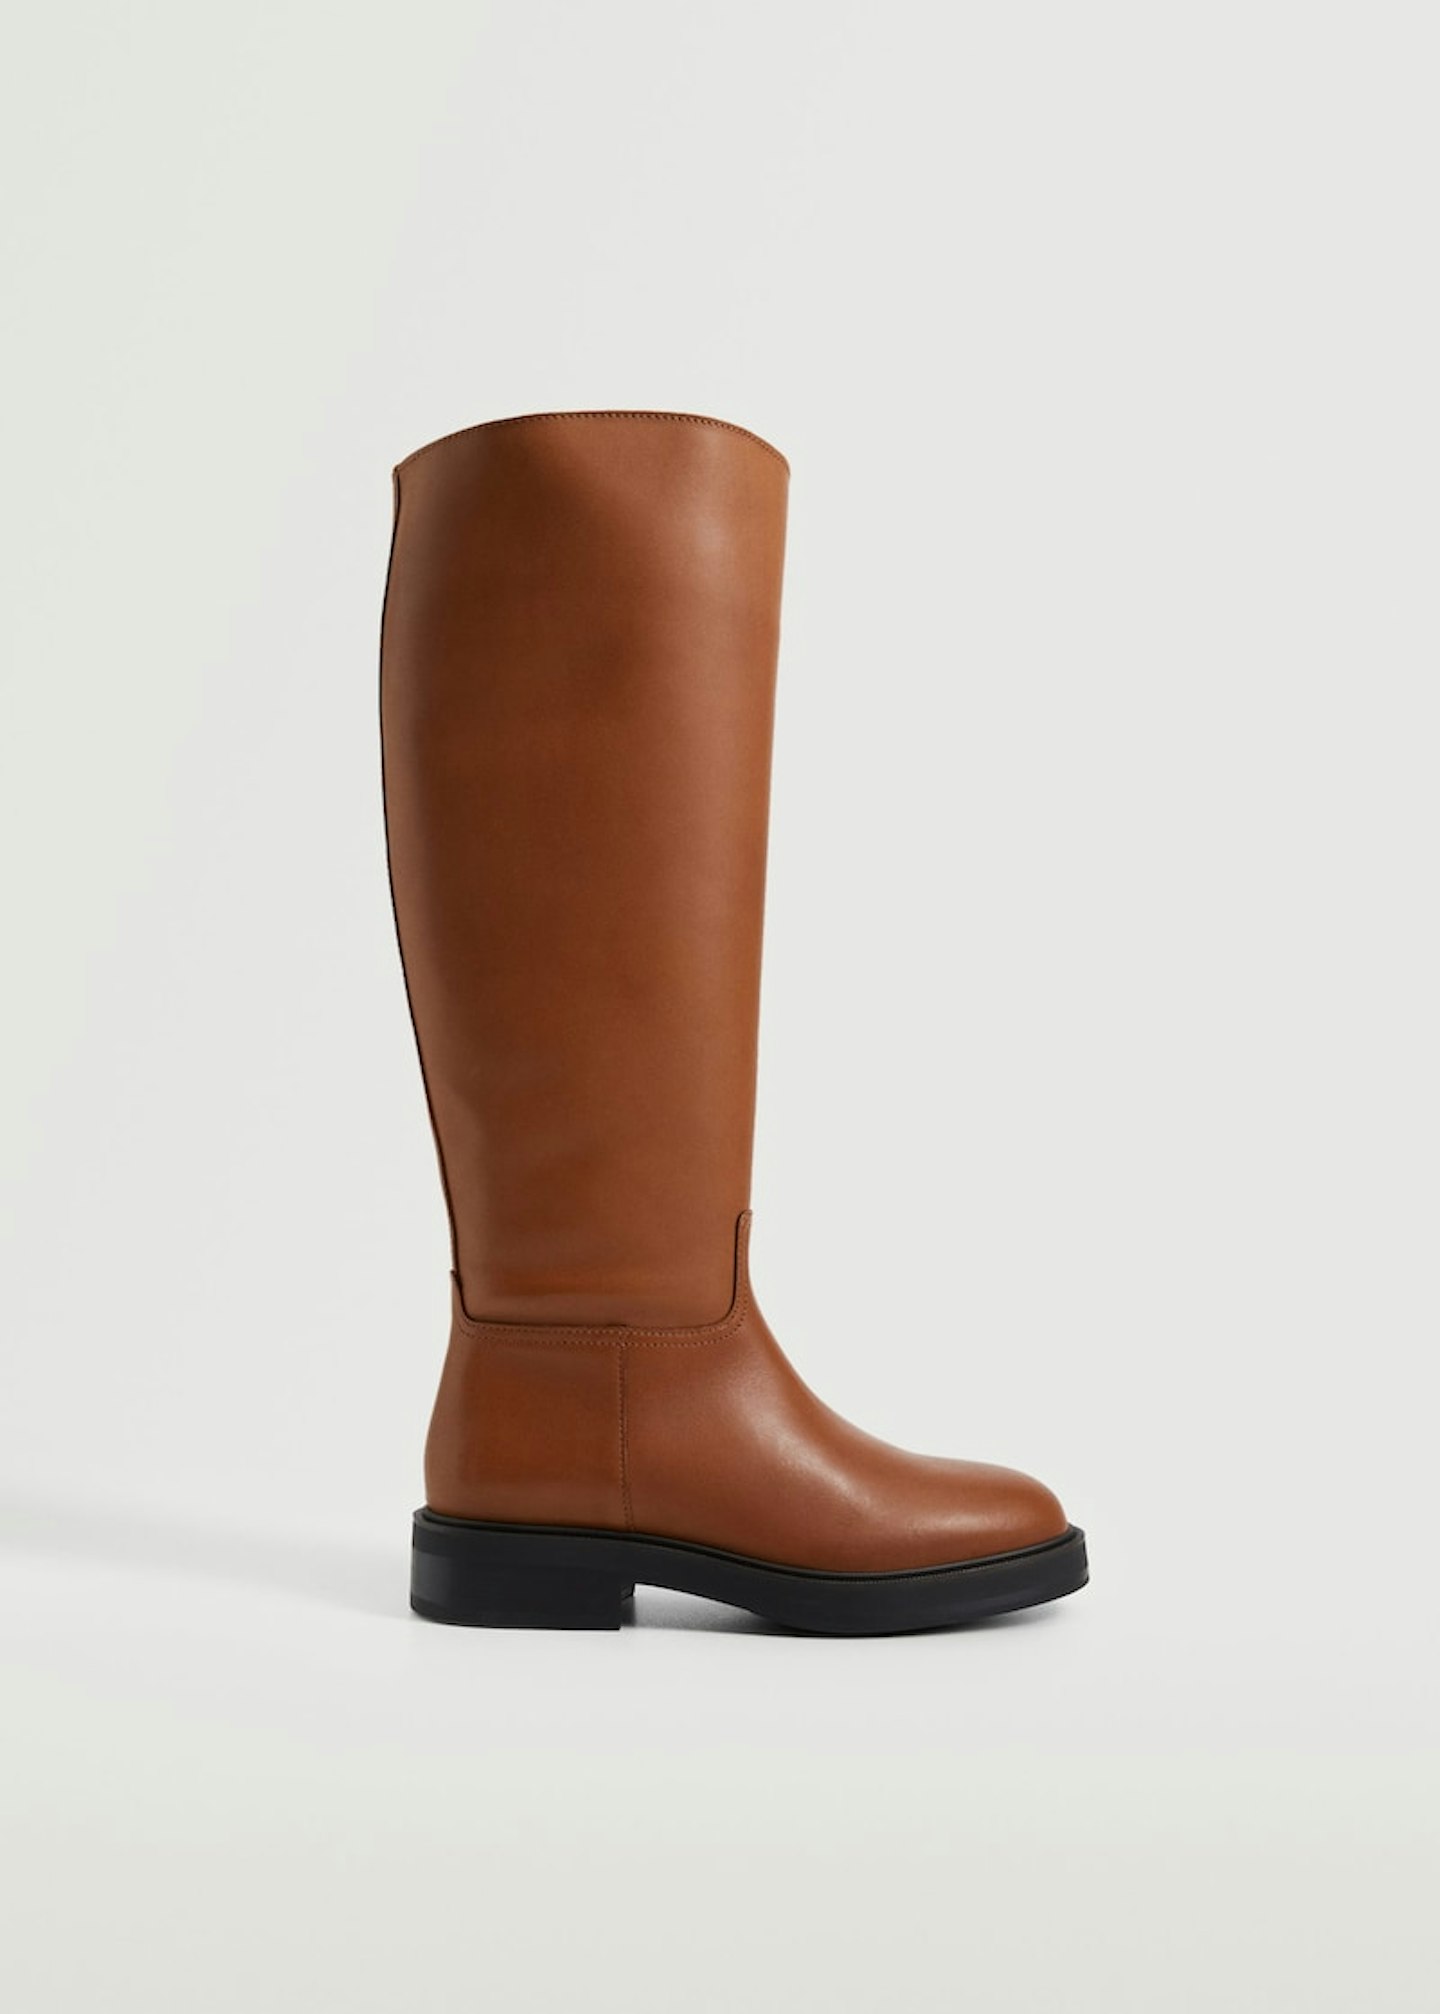 Mango Tan Leather Flat Boots, £139.99